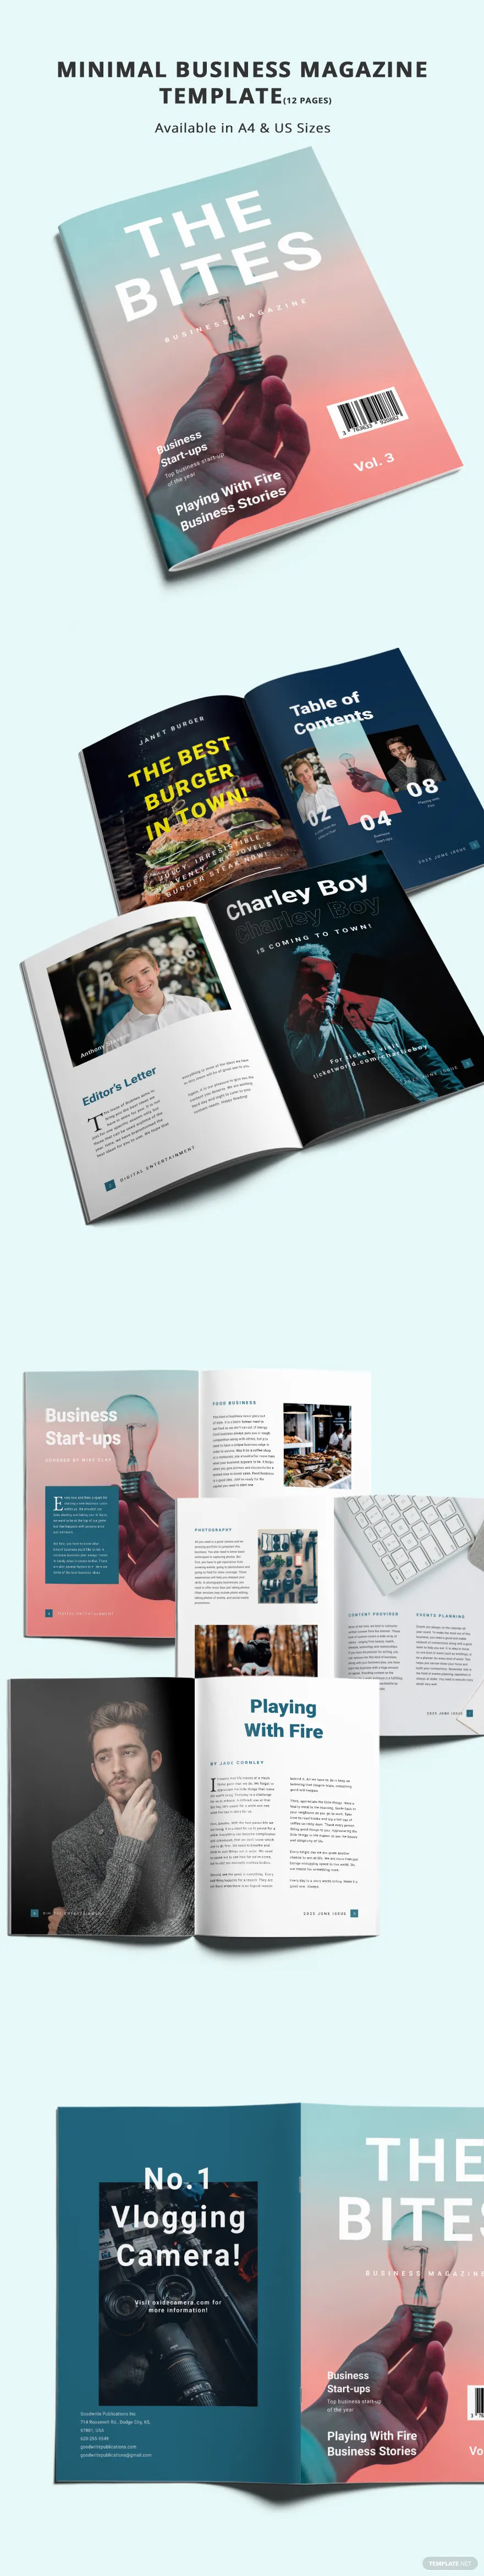 minimal business magazine